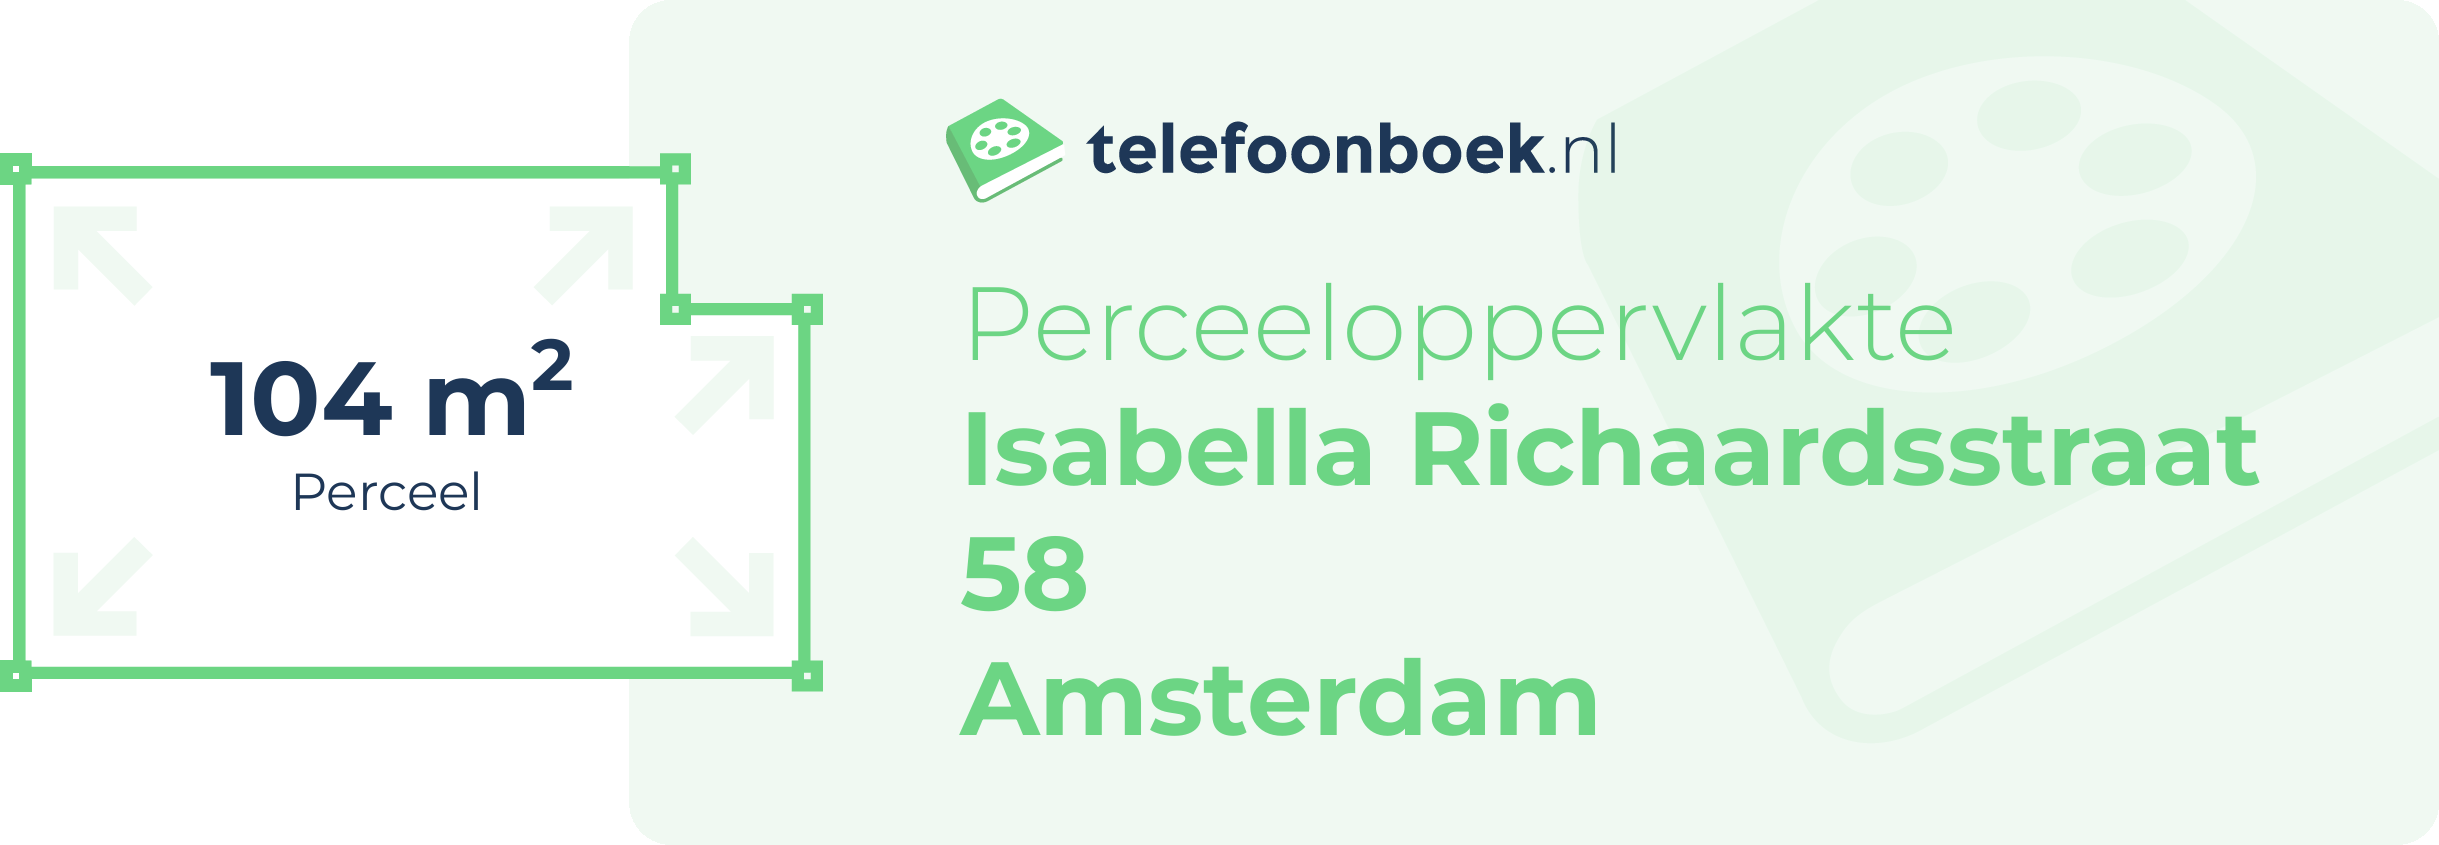 Perceeloppervlakte Isabella Richaardsstraat 58 Amsterdam